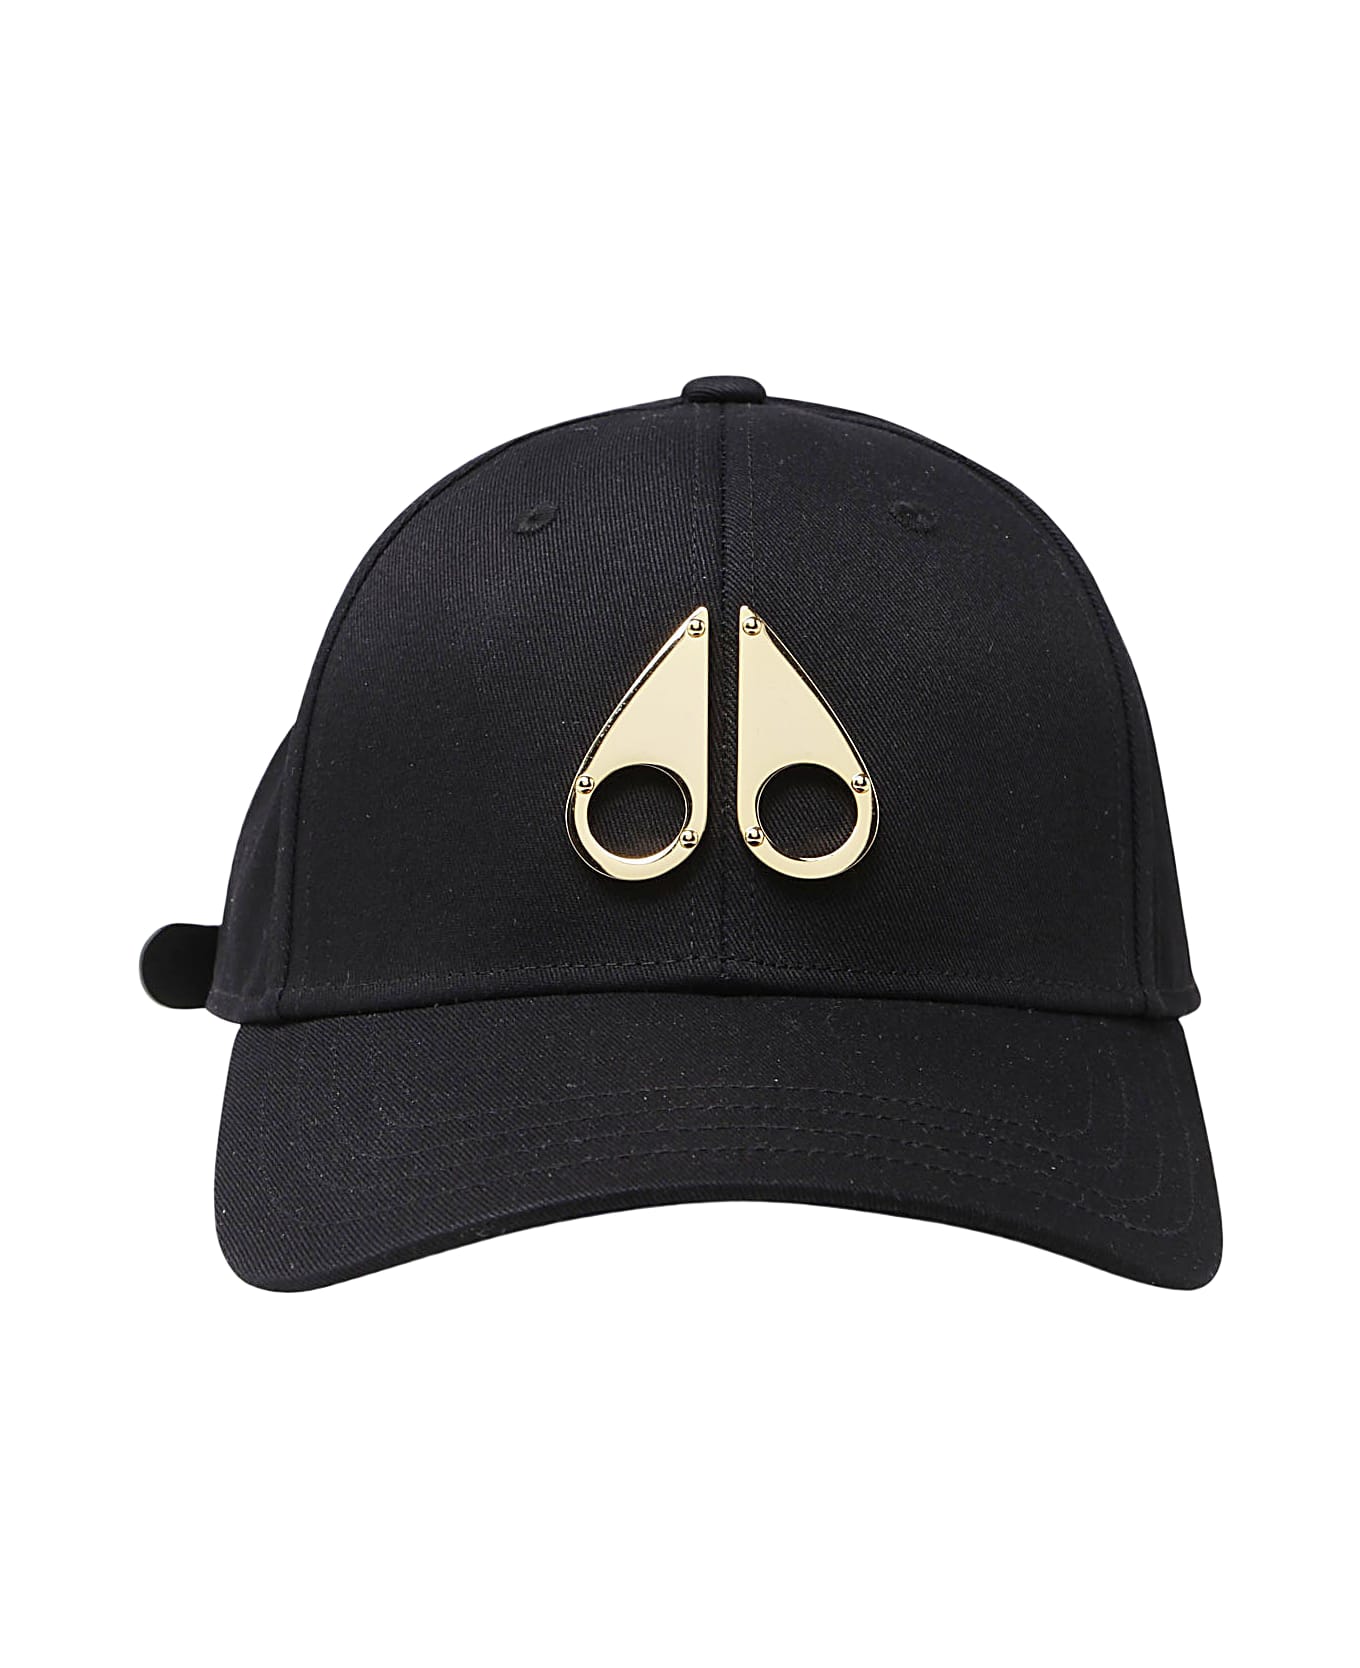 Moose Knuckles Black And Gold Cotton Logo Icon Baseball Cap - Black